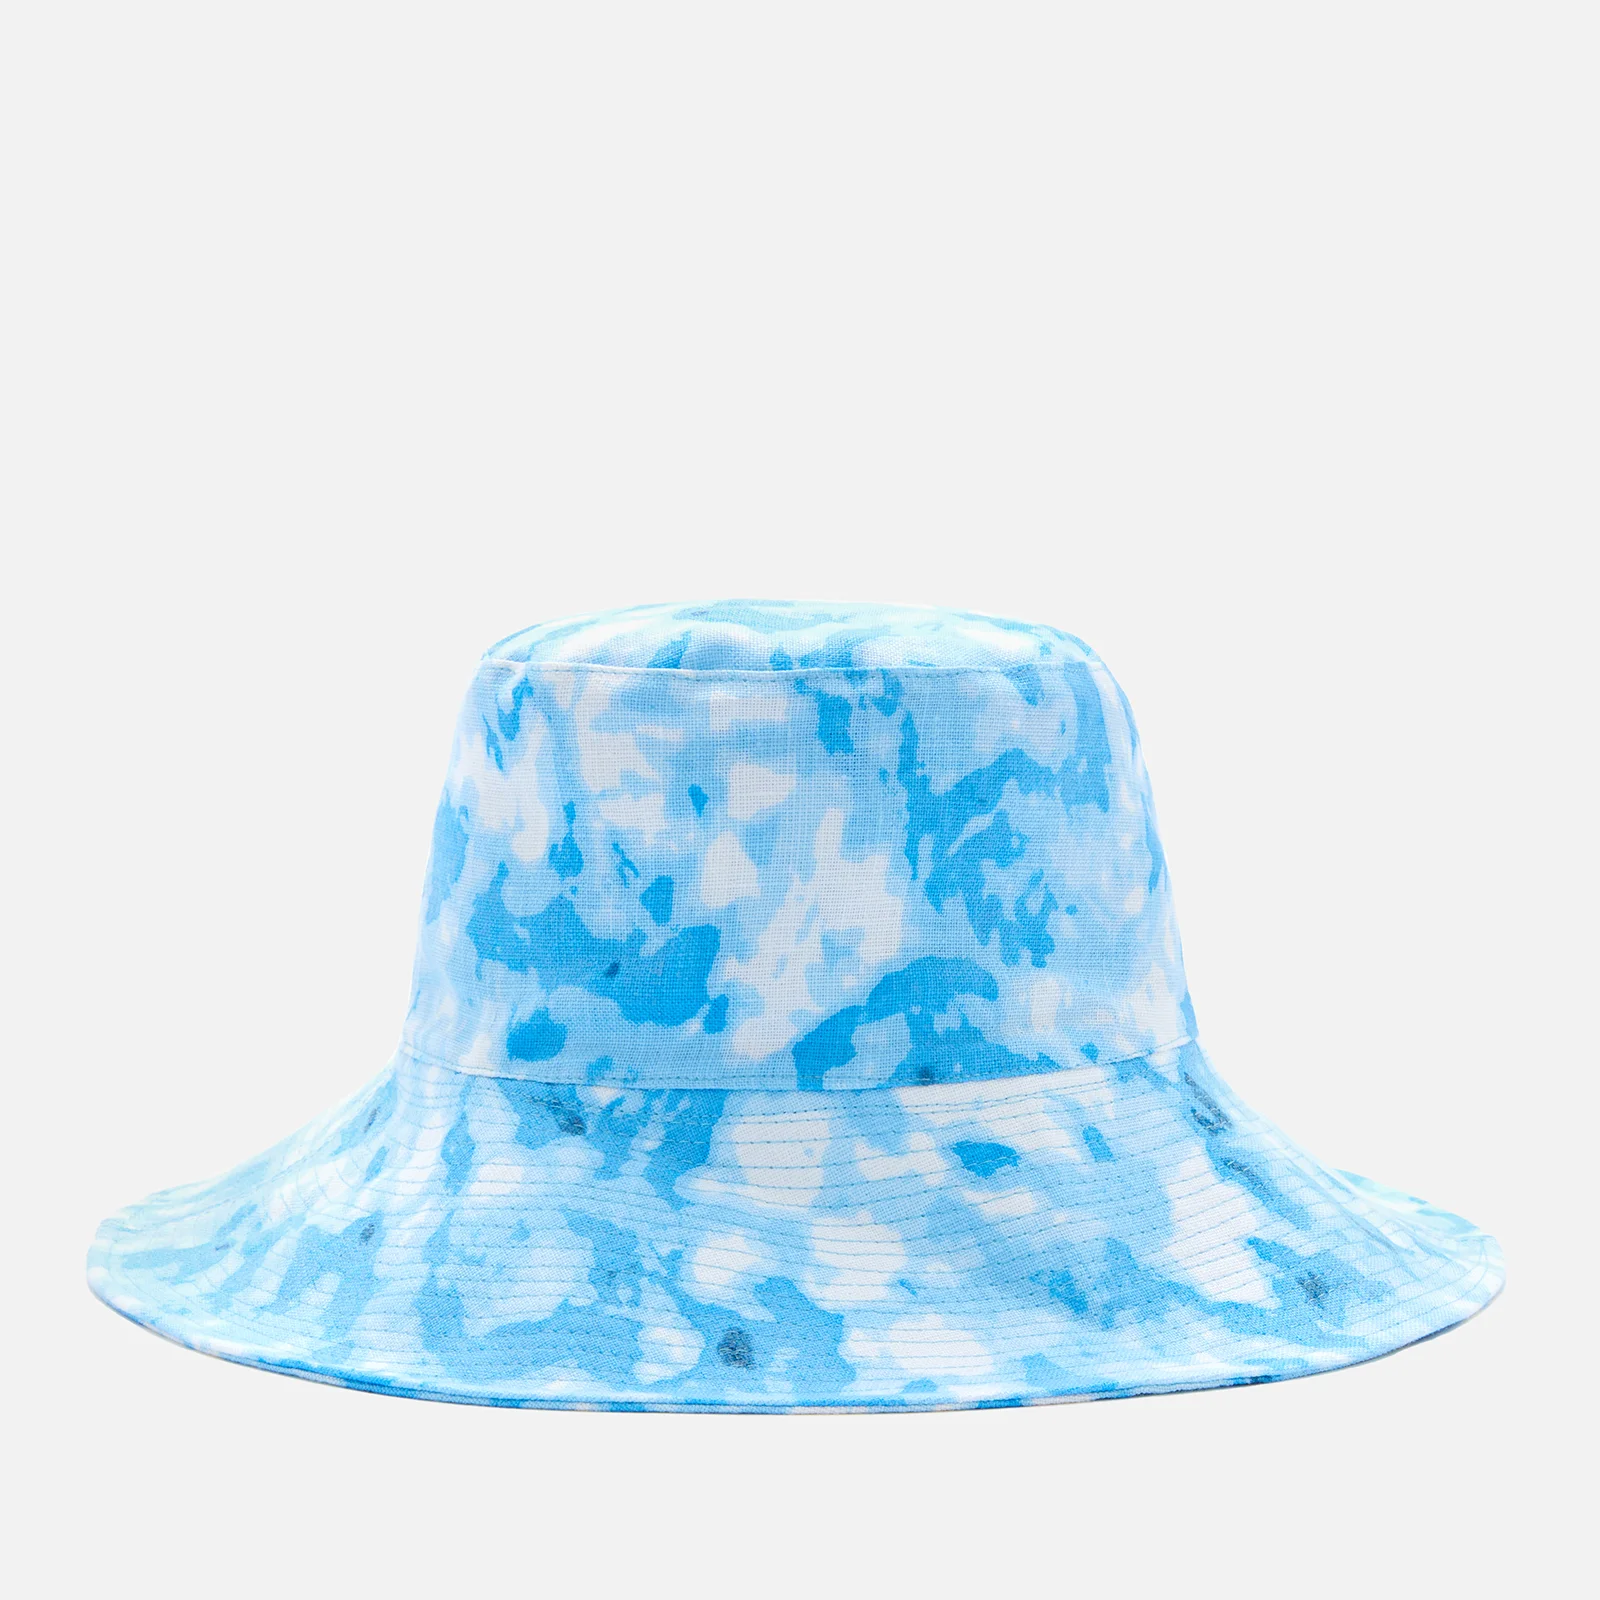 Faithfull The Brand Women's Bettina Bucket Hat - Roos Tie Dye Blue Image 1